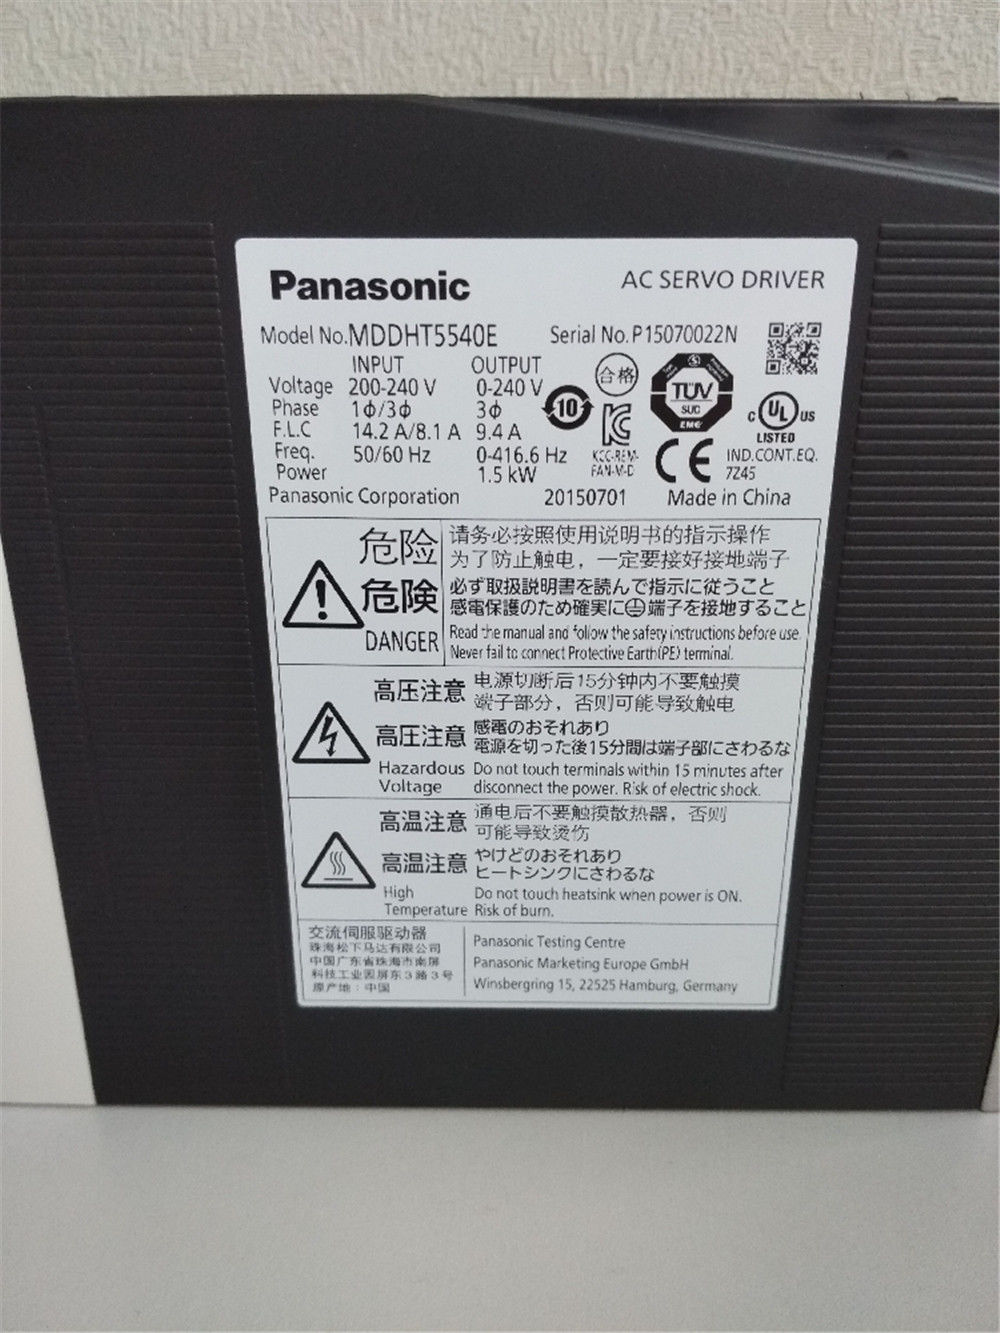 Brand New PANASONIC MINAS A5 Servo drive MDDHT5540E in box - Click Image to Close